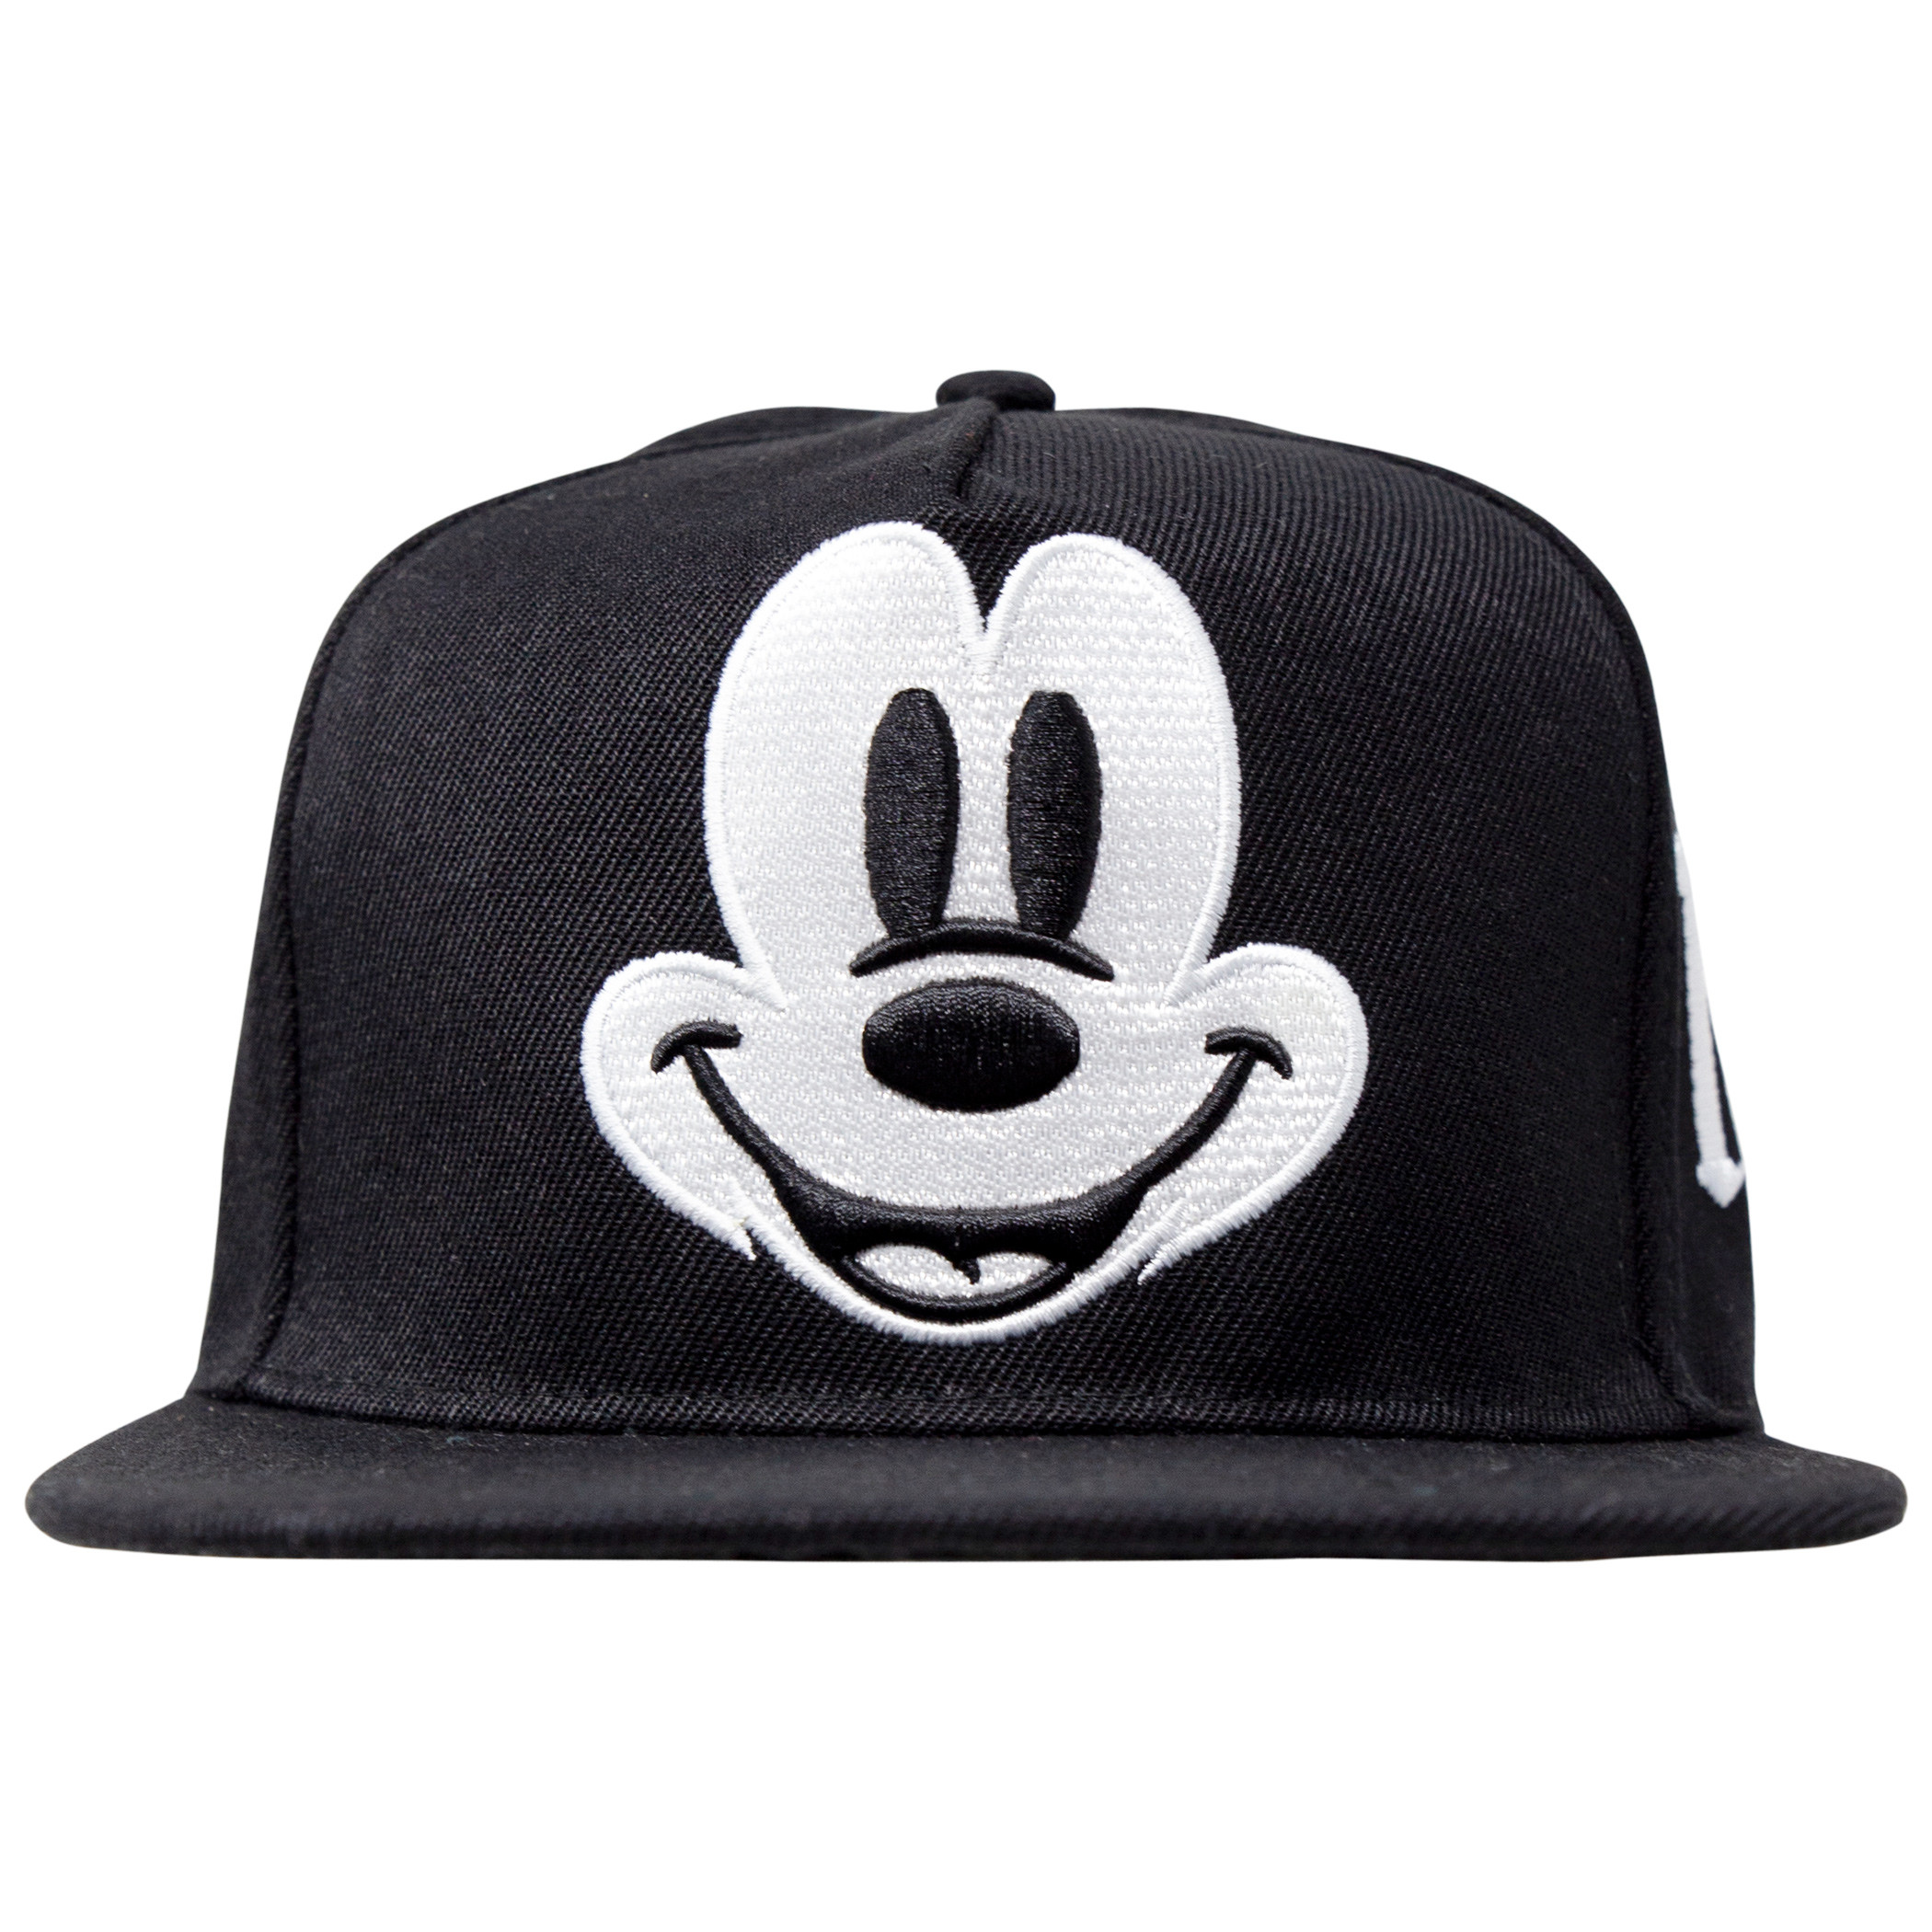 Mickey Mouse Big Face Adjustable Black Snapback Hat